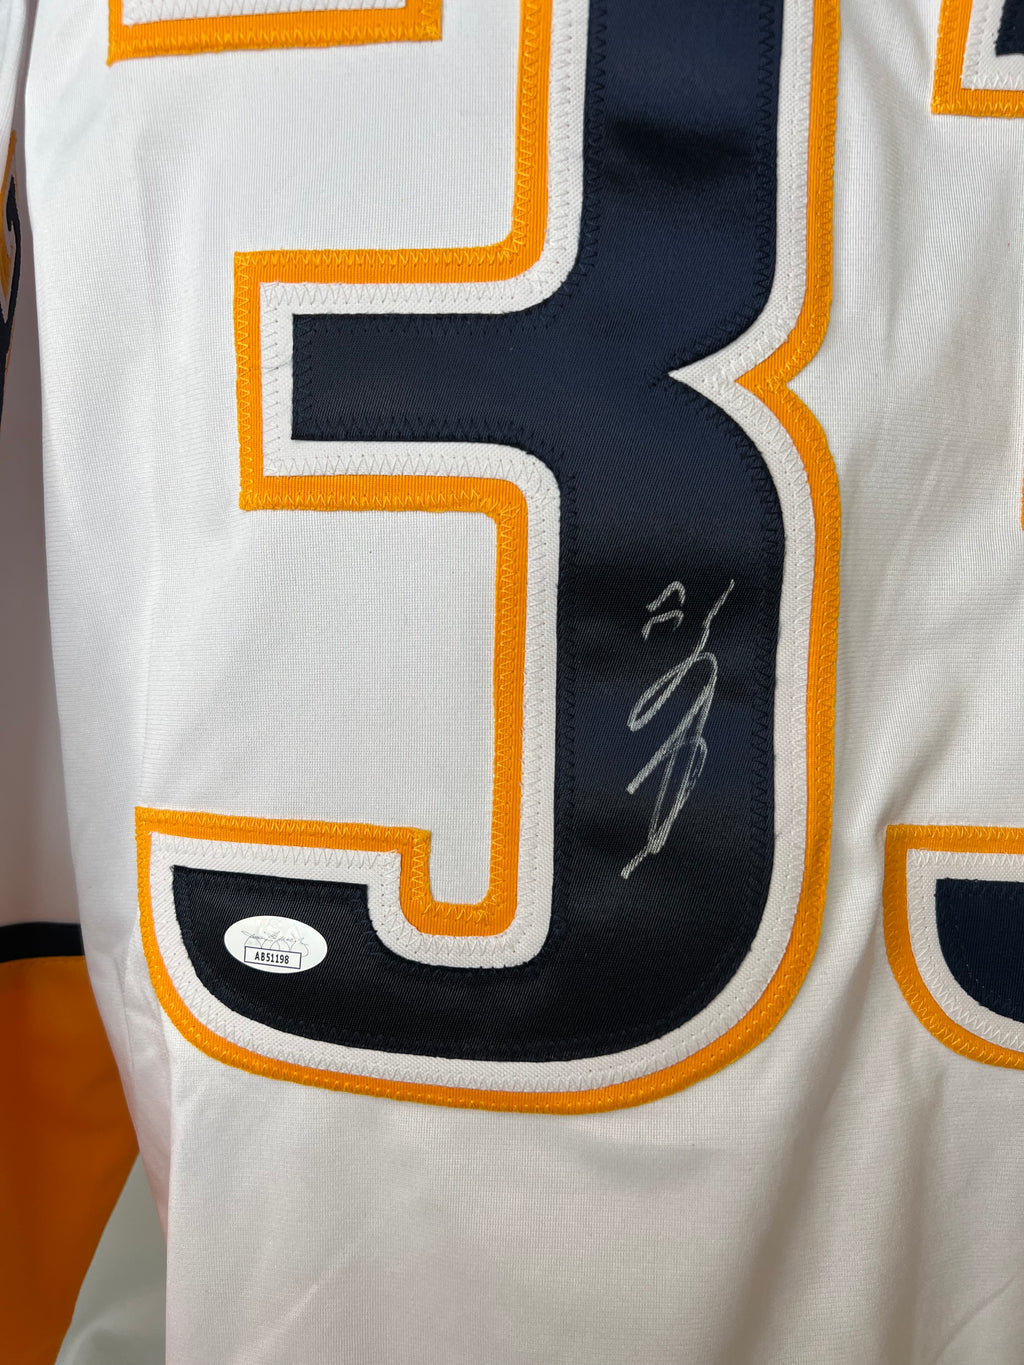 Viktor Arvidsson autographed signed jersey NHL Nashville Predators JSA COA